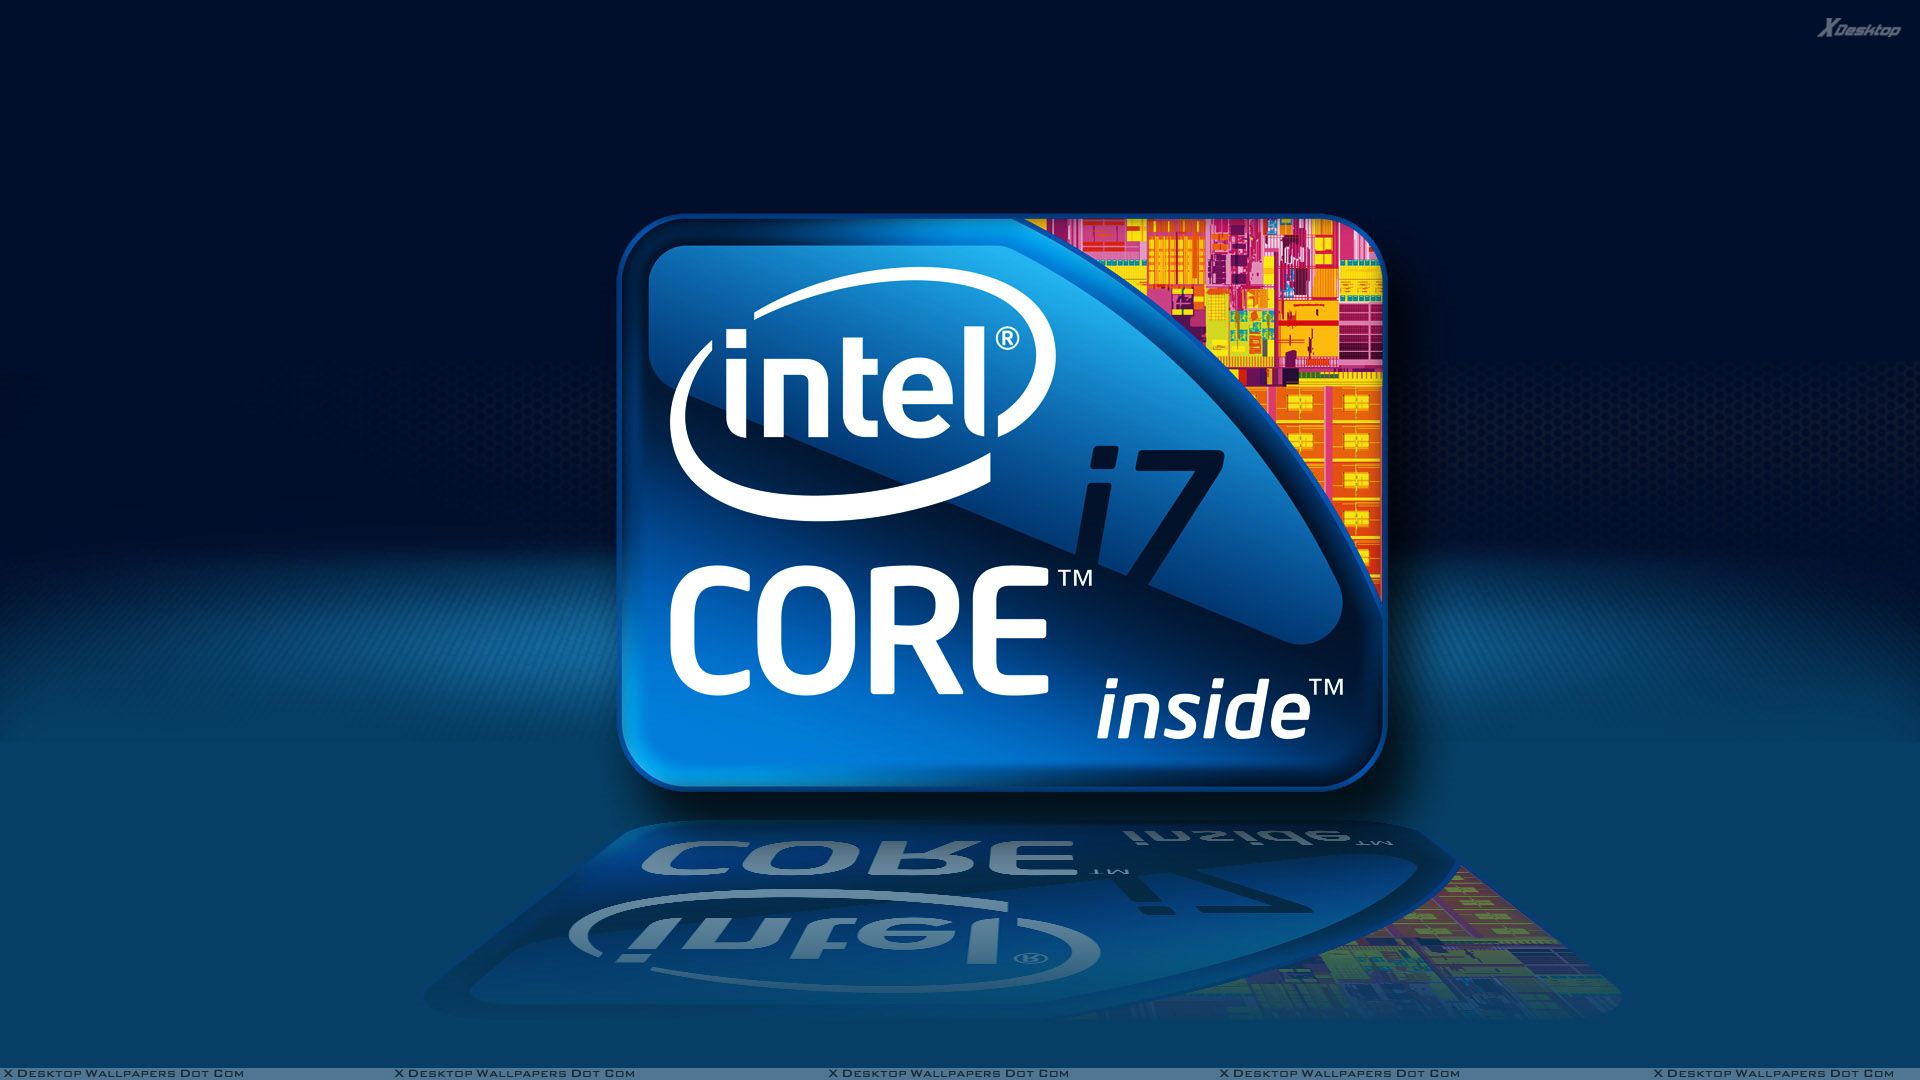 Intel Core i7 Processor On Blue Background Wallpaper